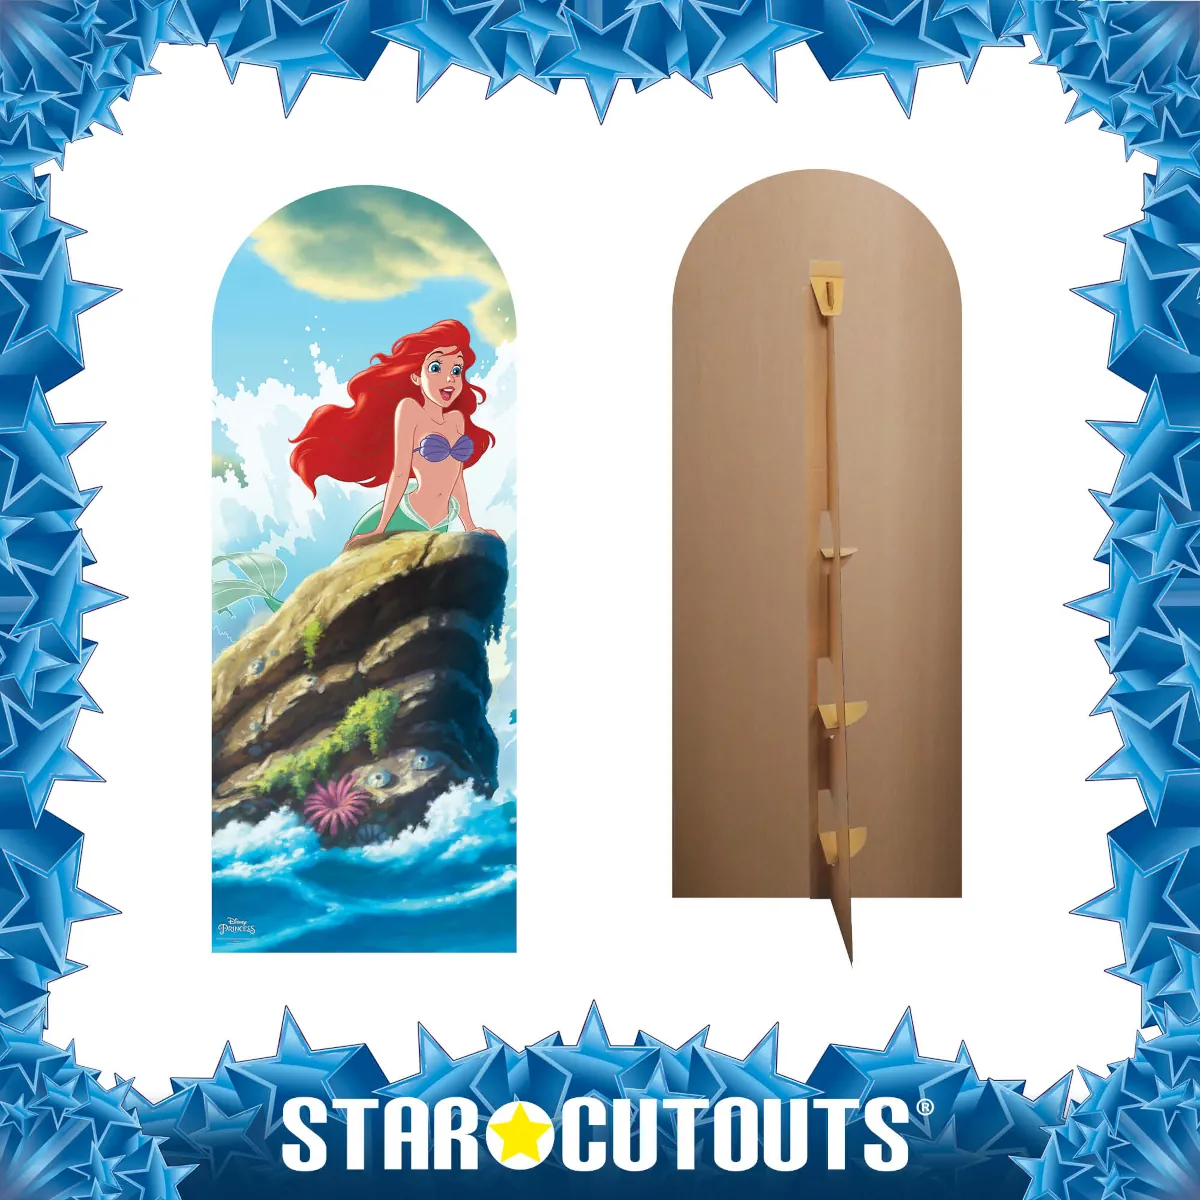 The Little Mermaid Disney Classic Official Backdrop Single Cardboard Cutout Frame